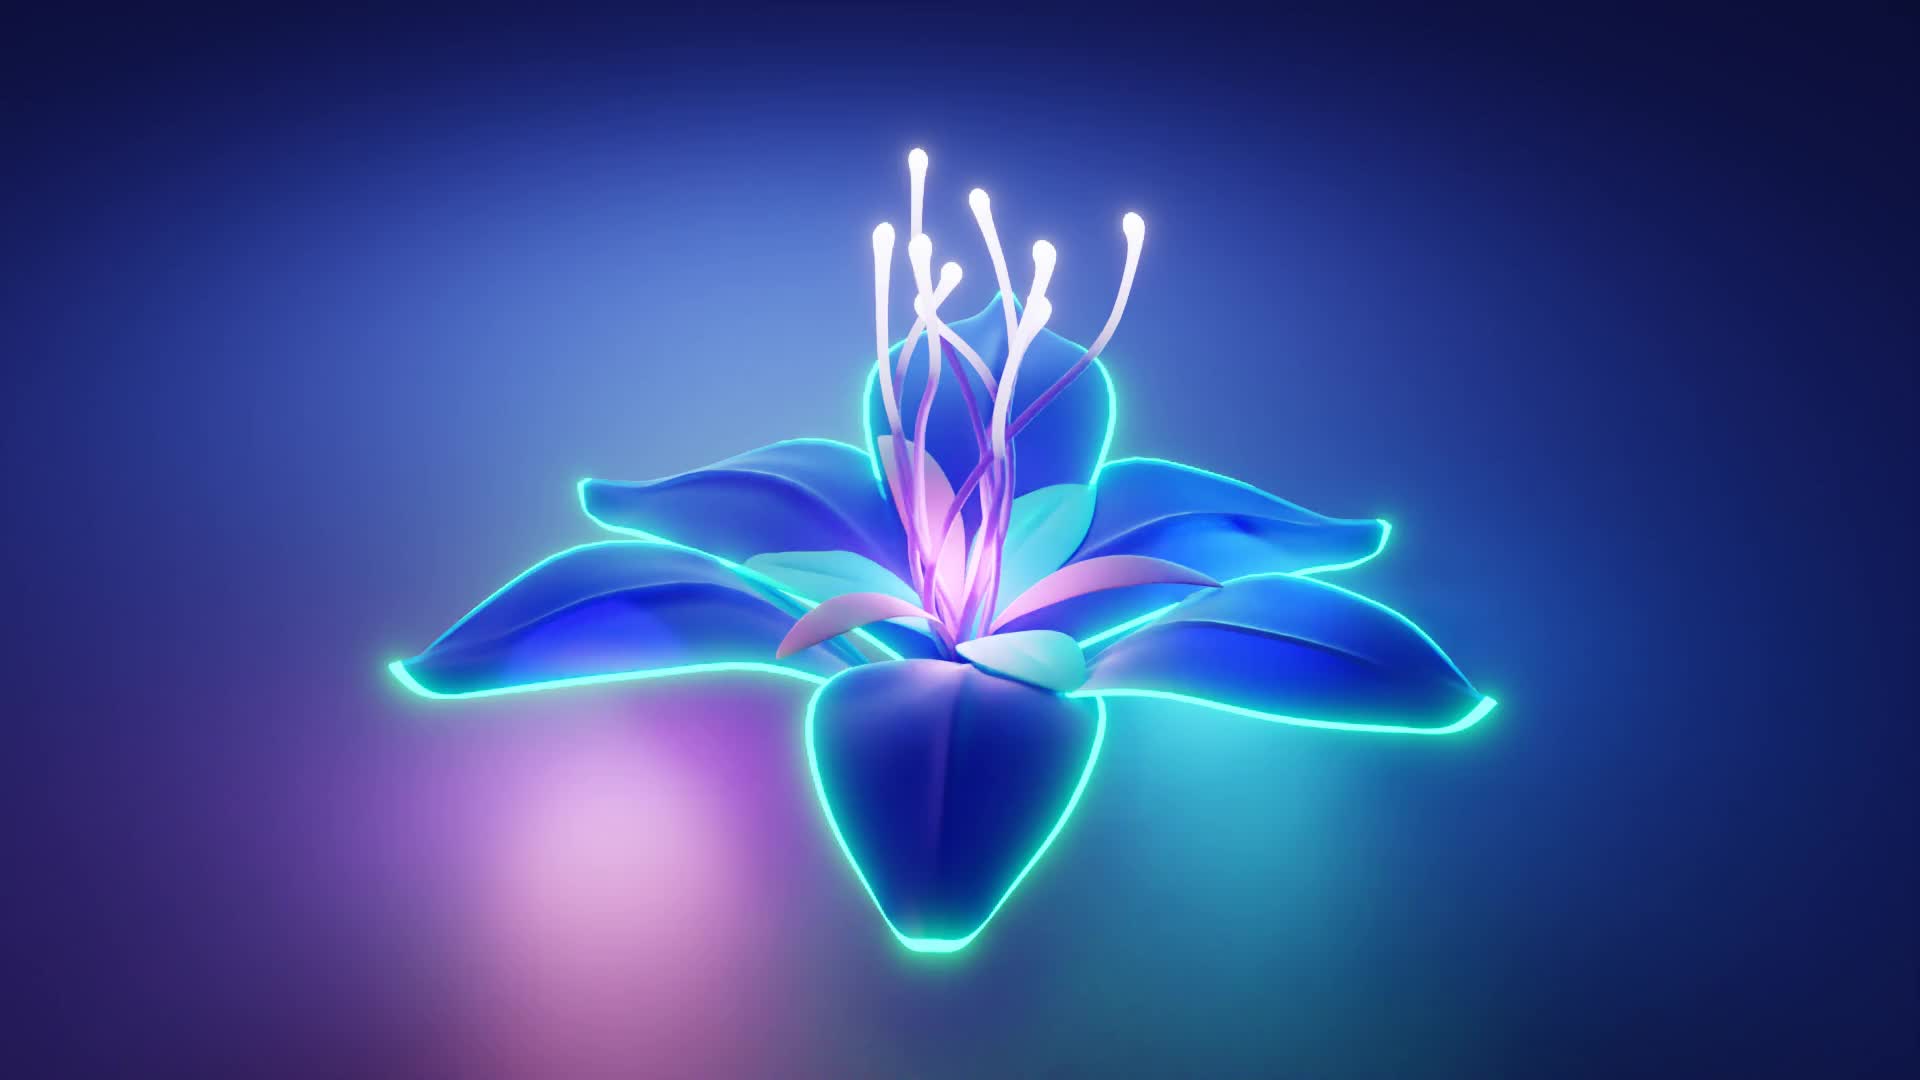 ArtStation - Neon flowers